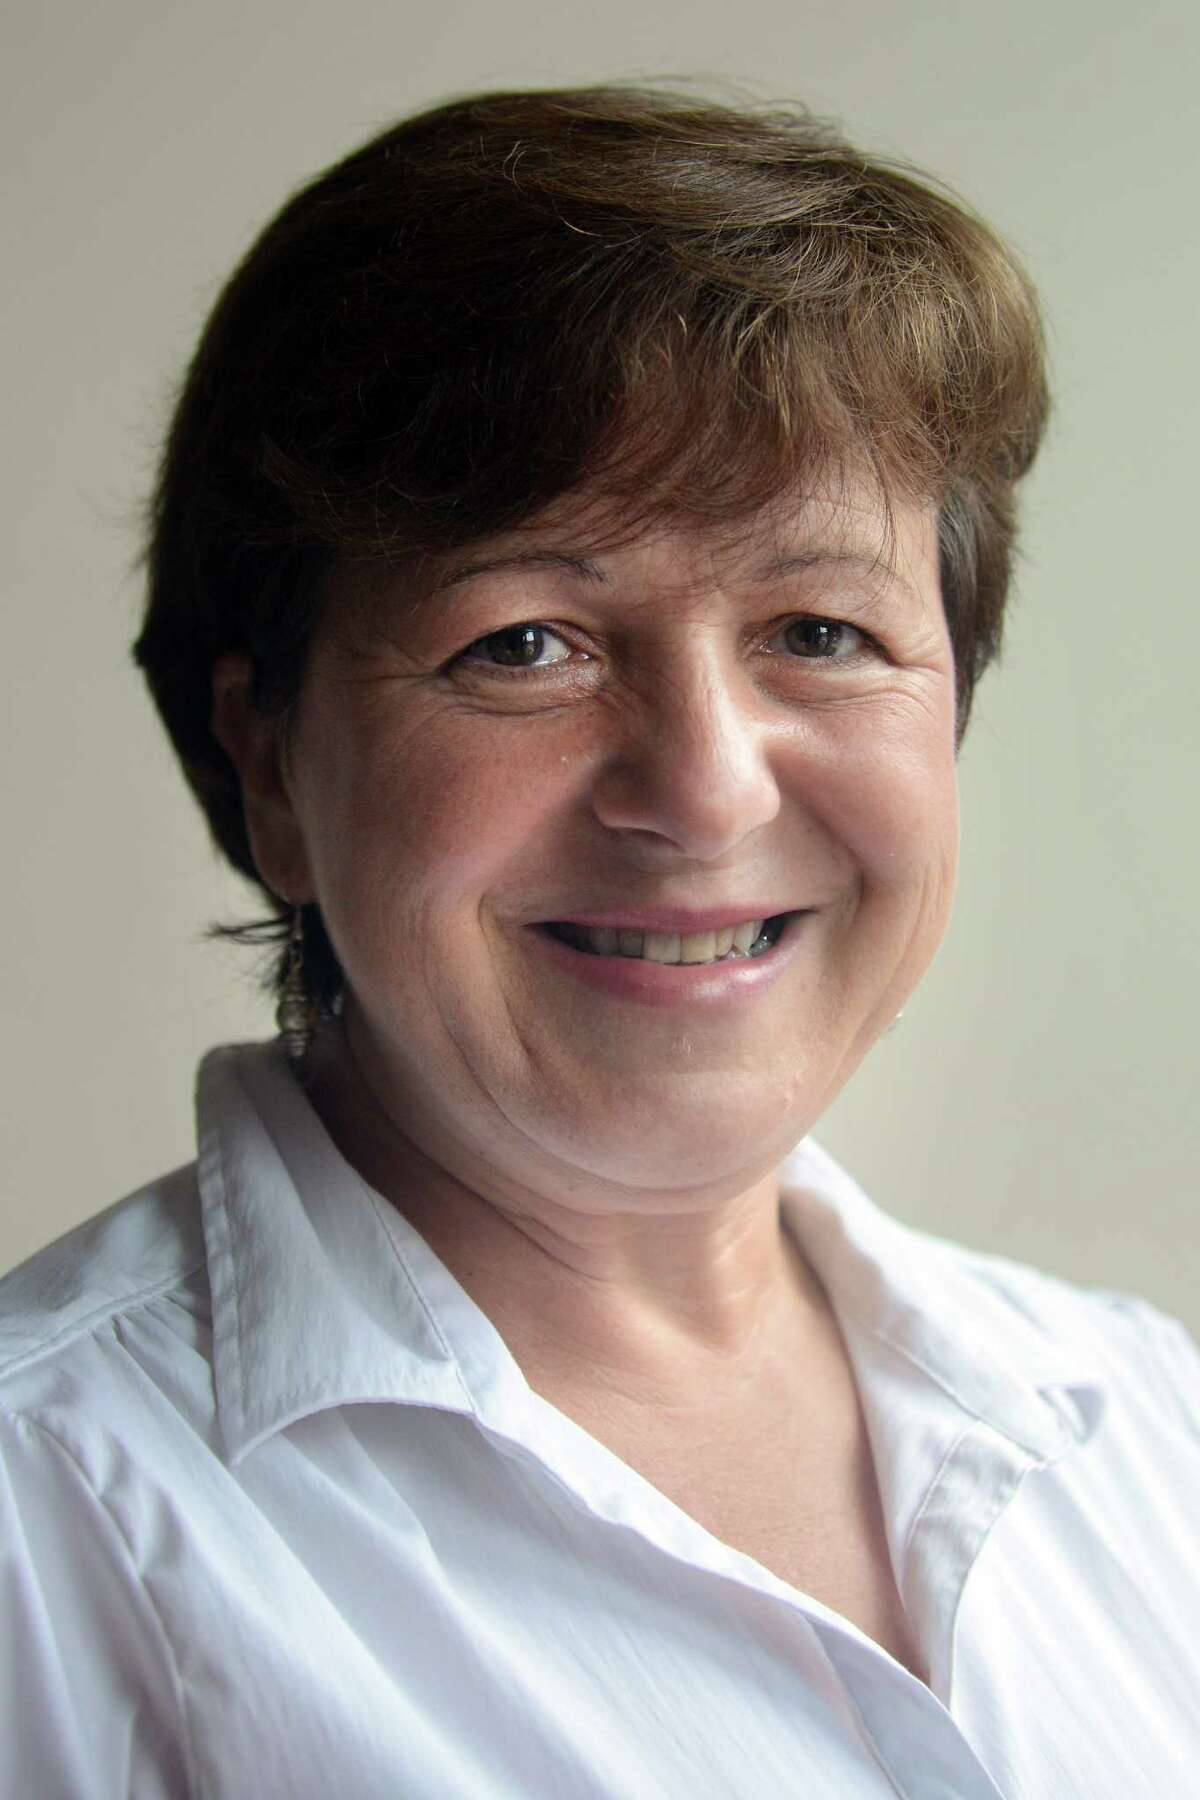 Anita Dugatto, democratic candidate for mayor of Derby, Conn.